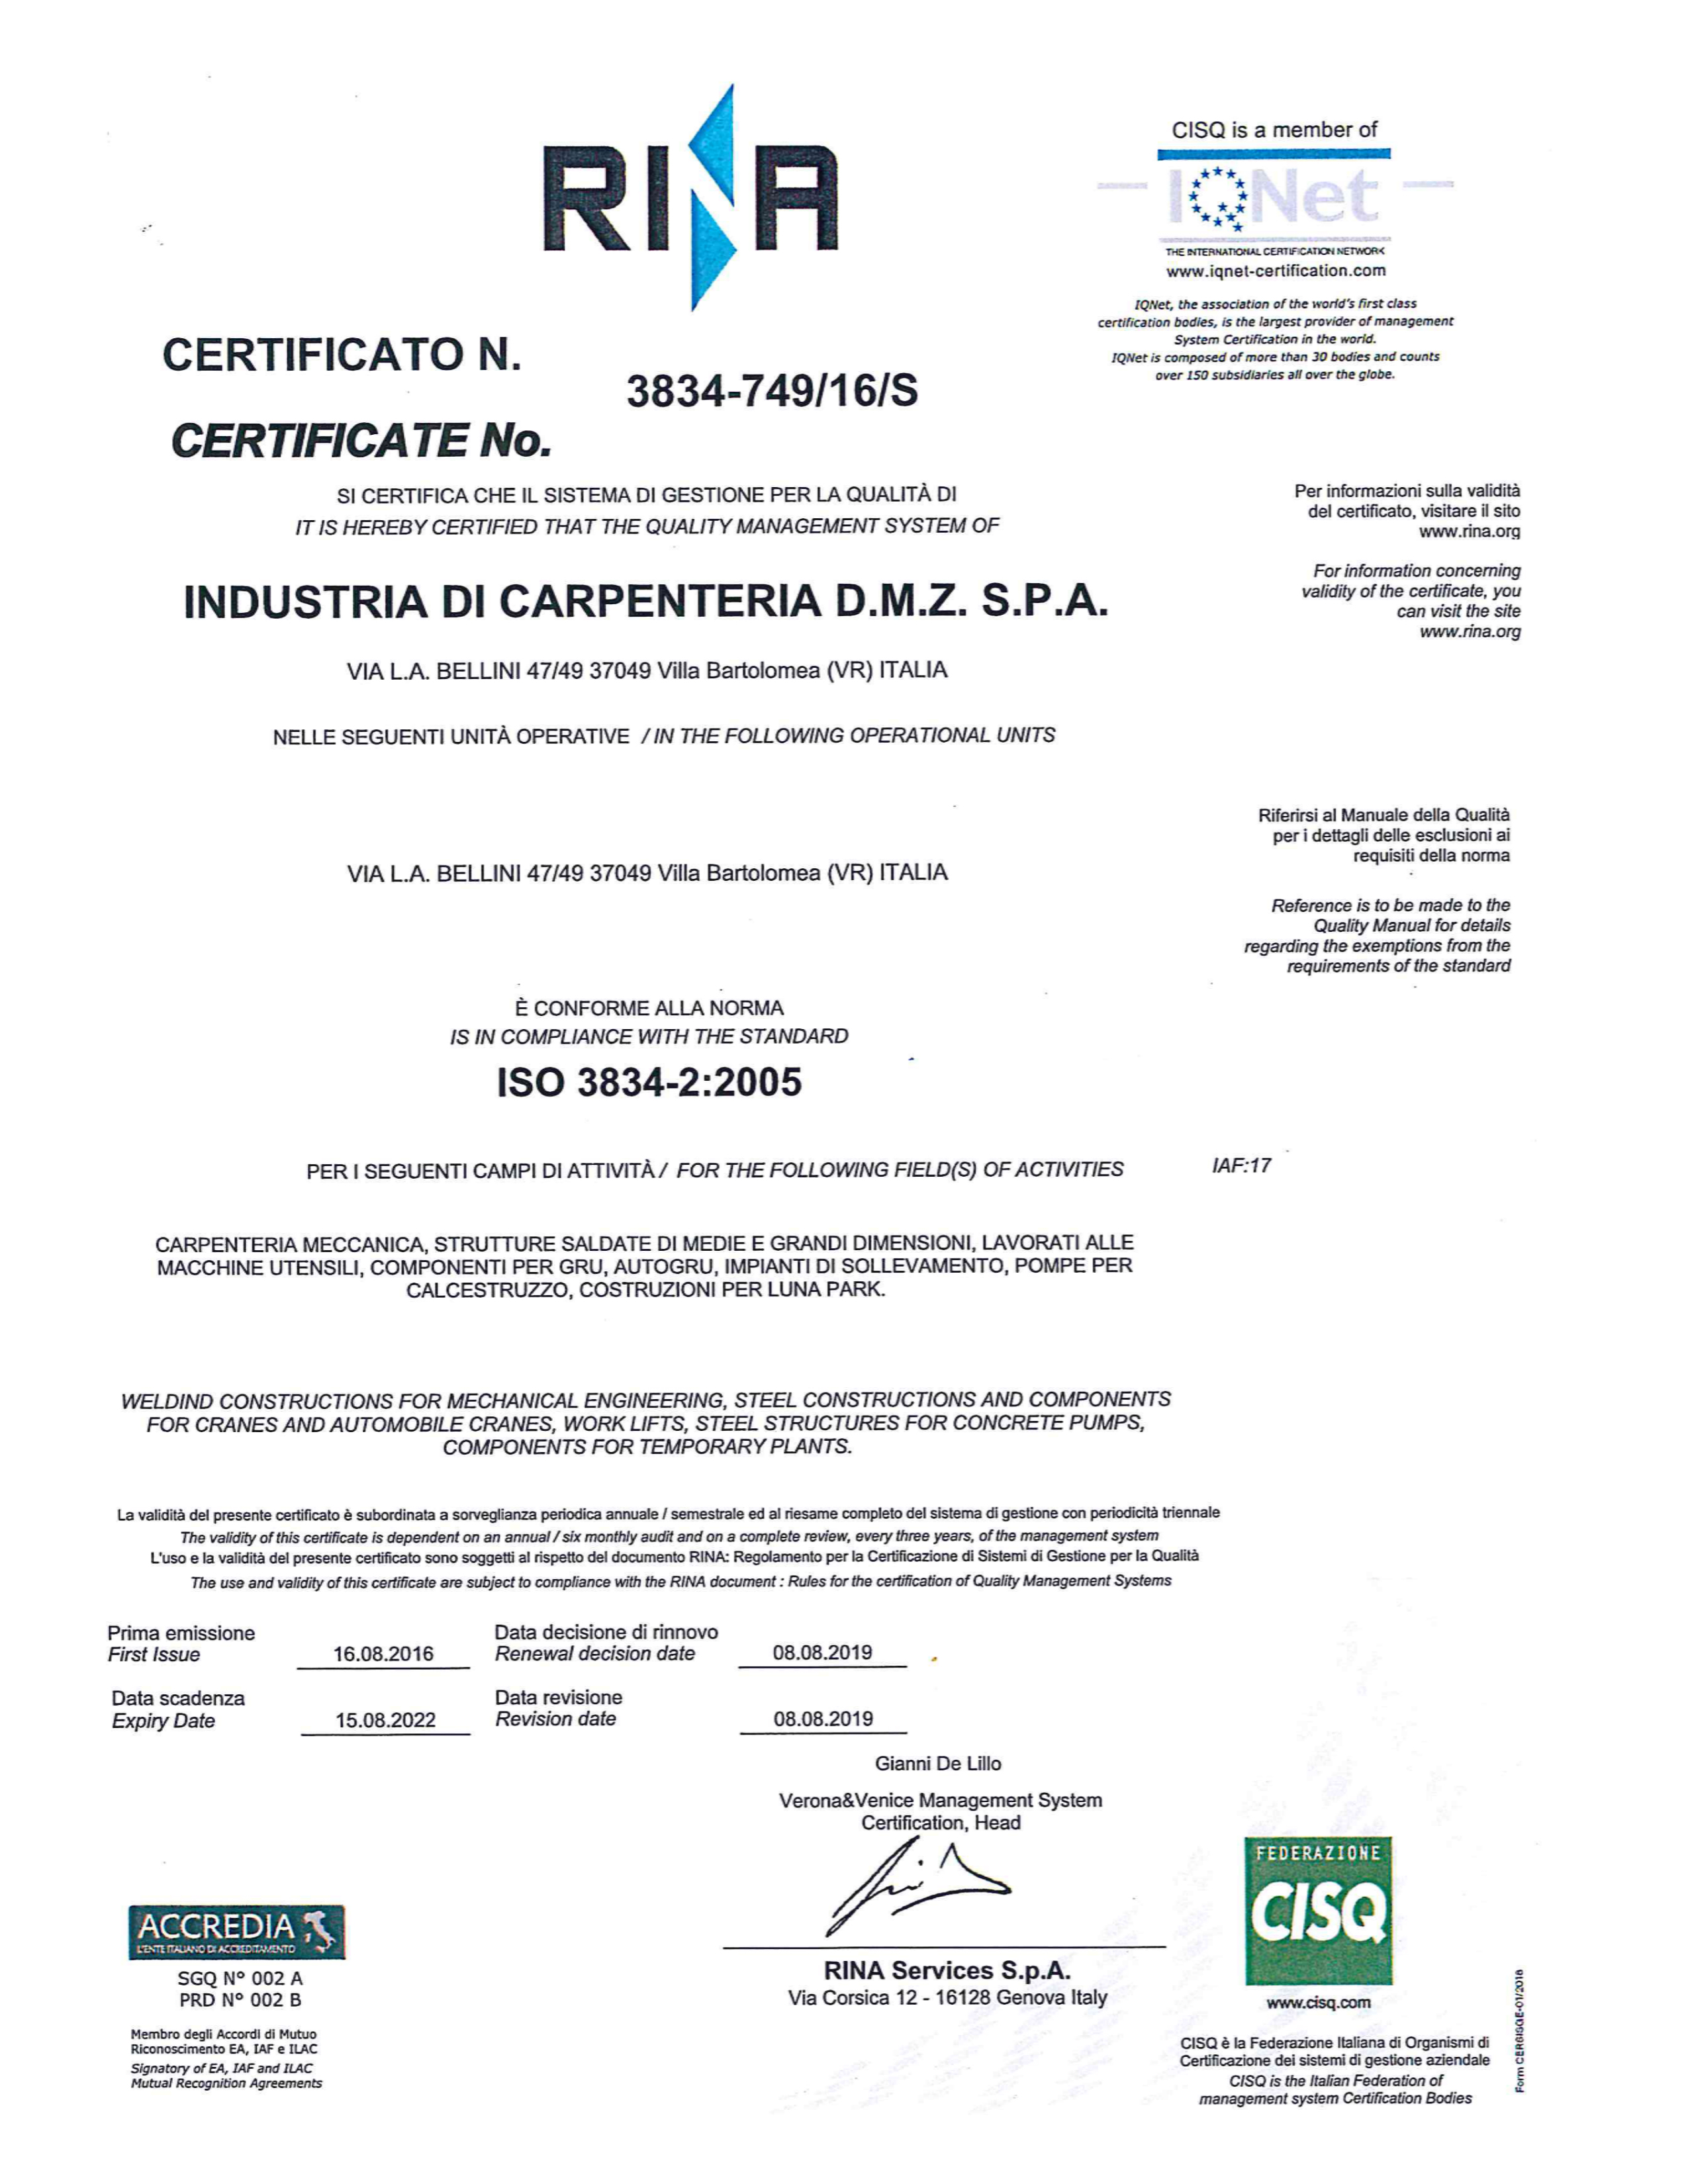 Certificazioni Rina 03 | DMZ